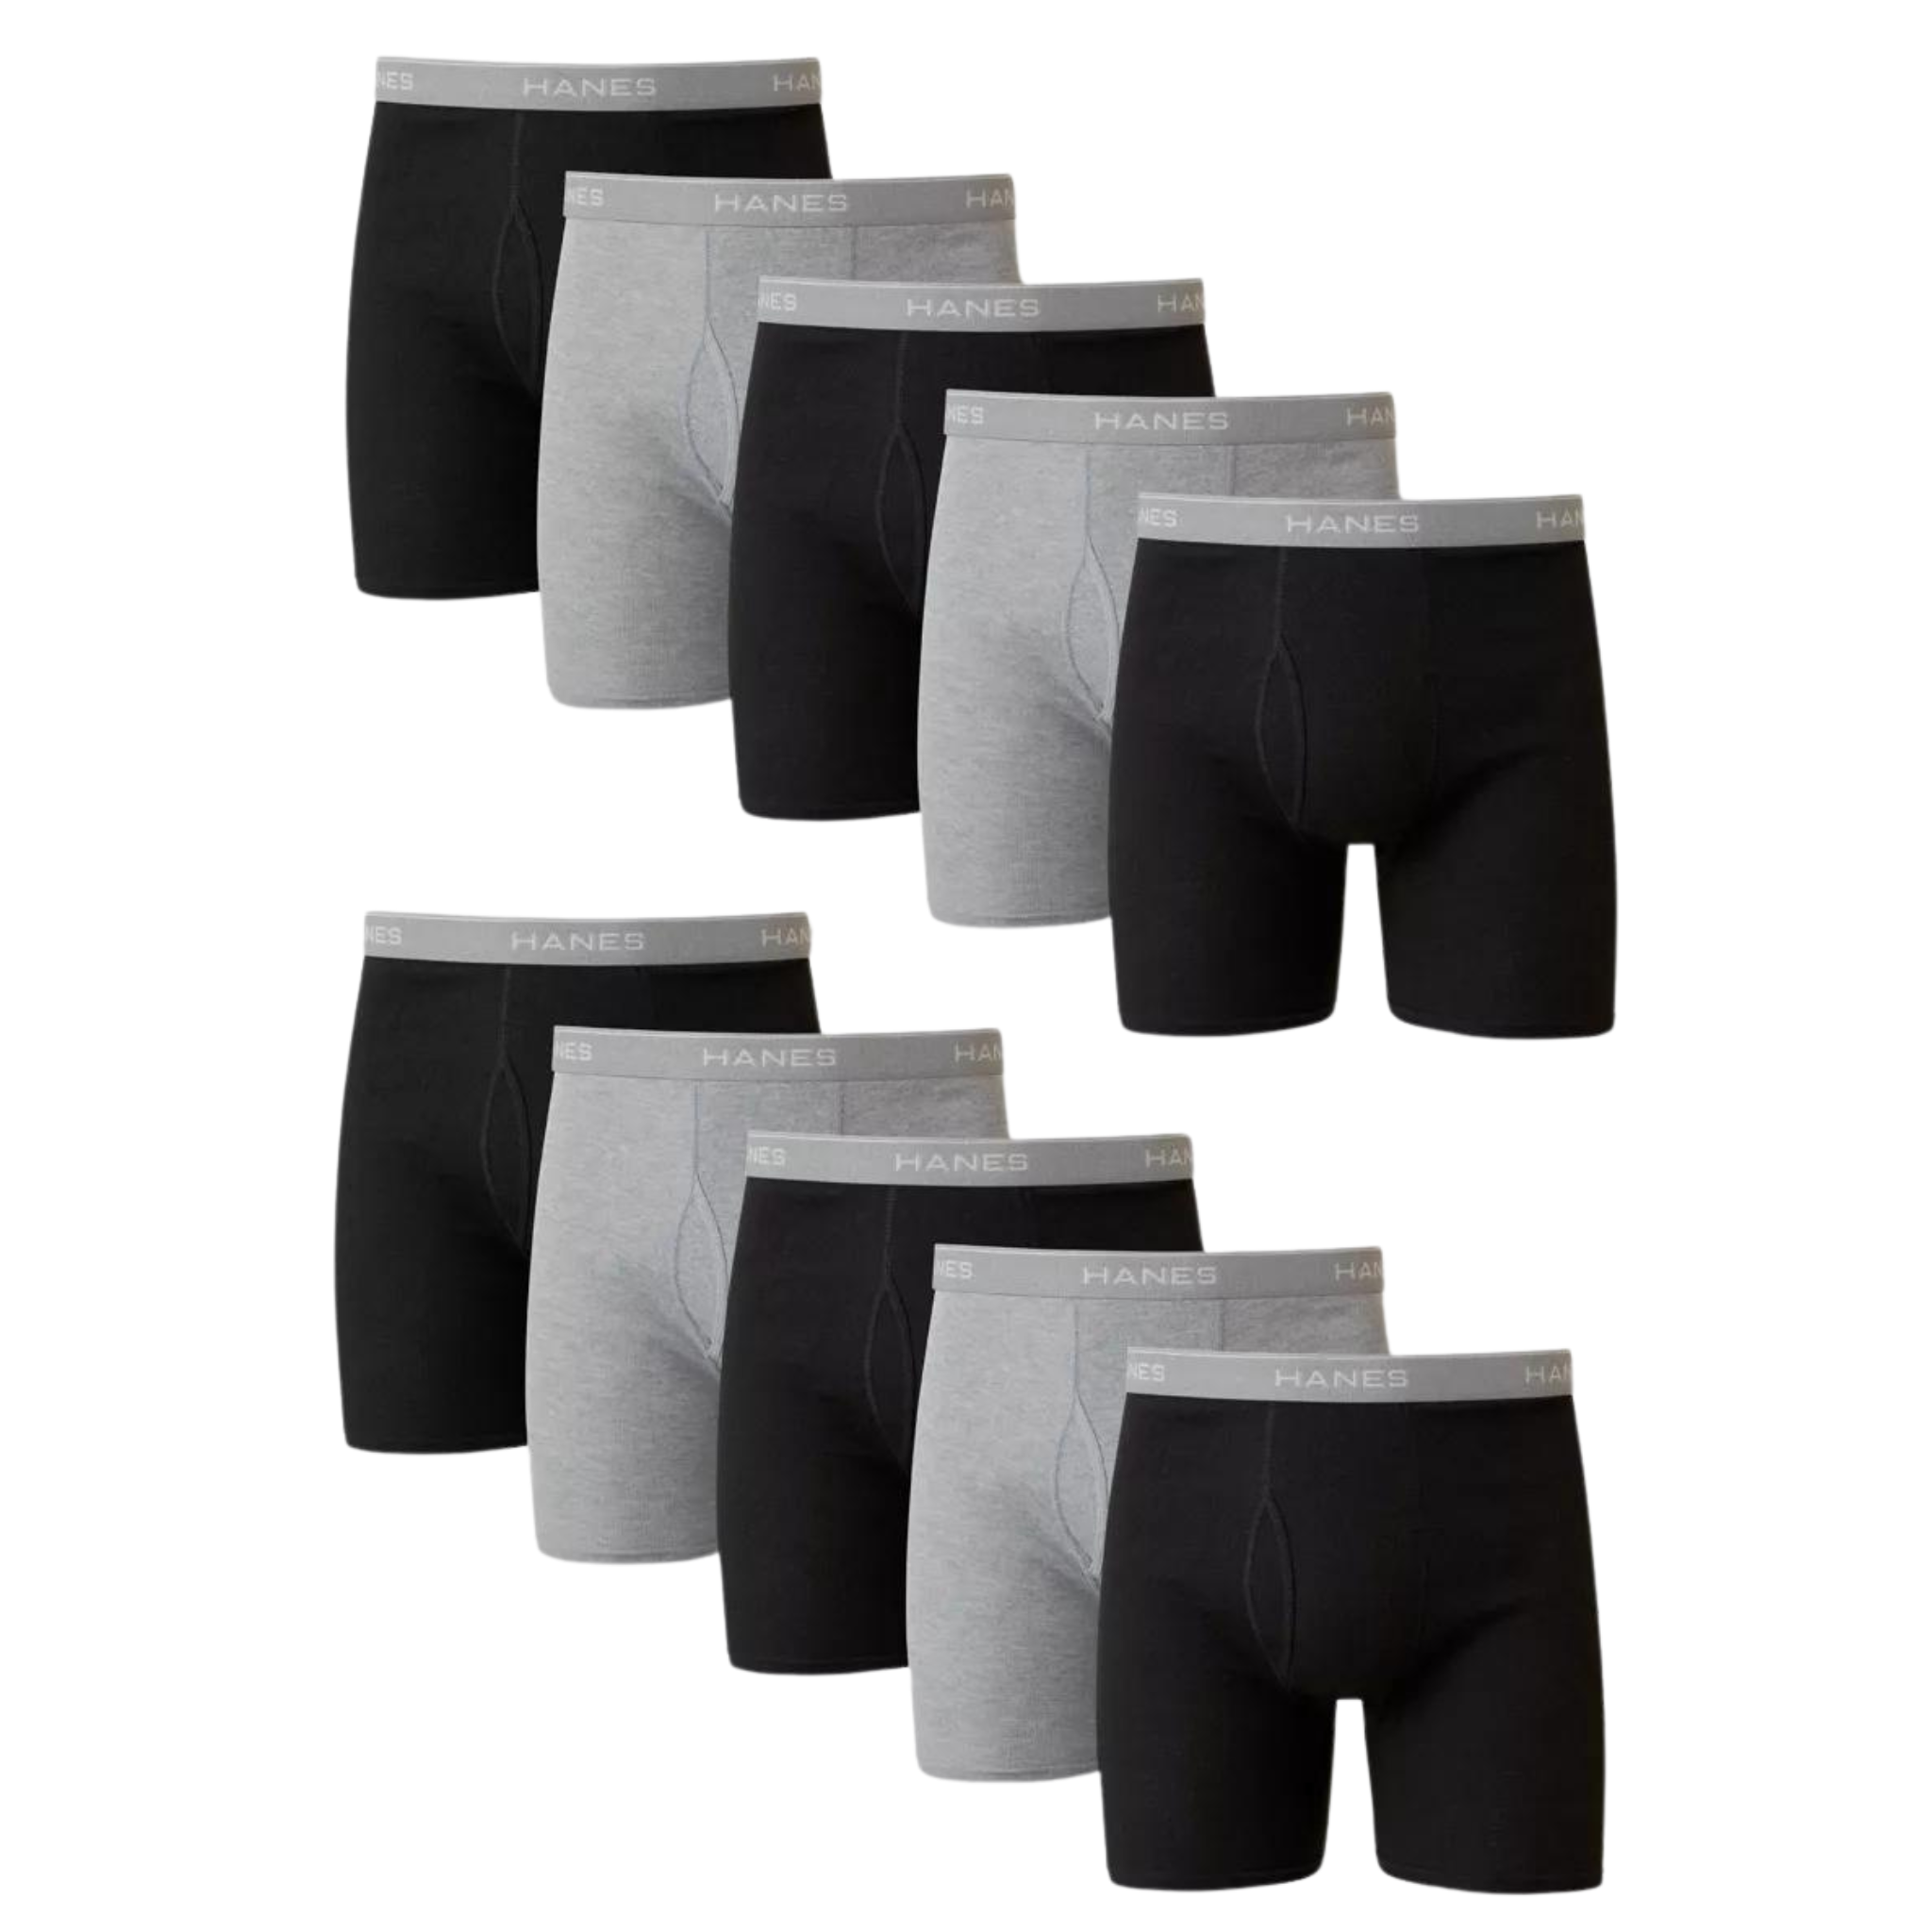 10-Pack Hanes Men's Moisture-Wicking Cotton Boxer Briefs (Black/Gray)